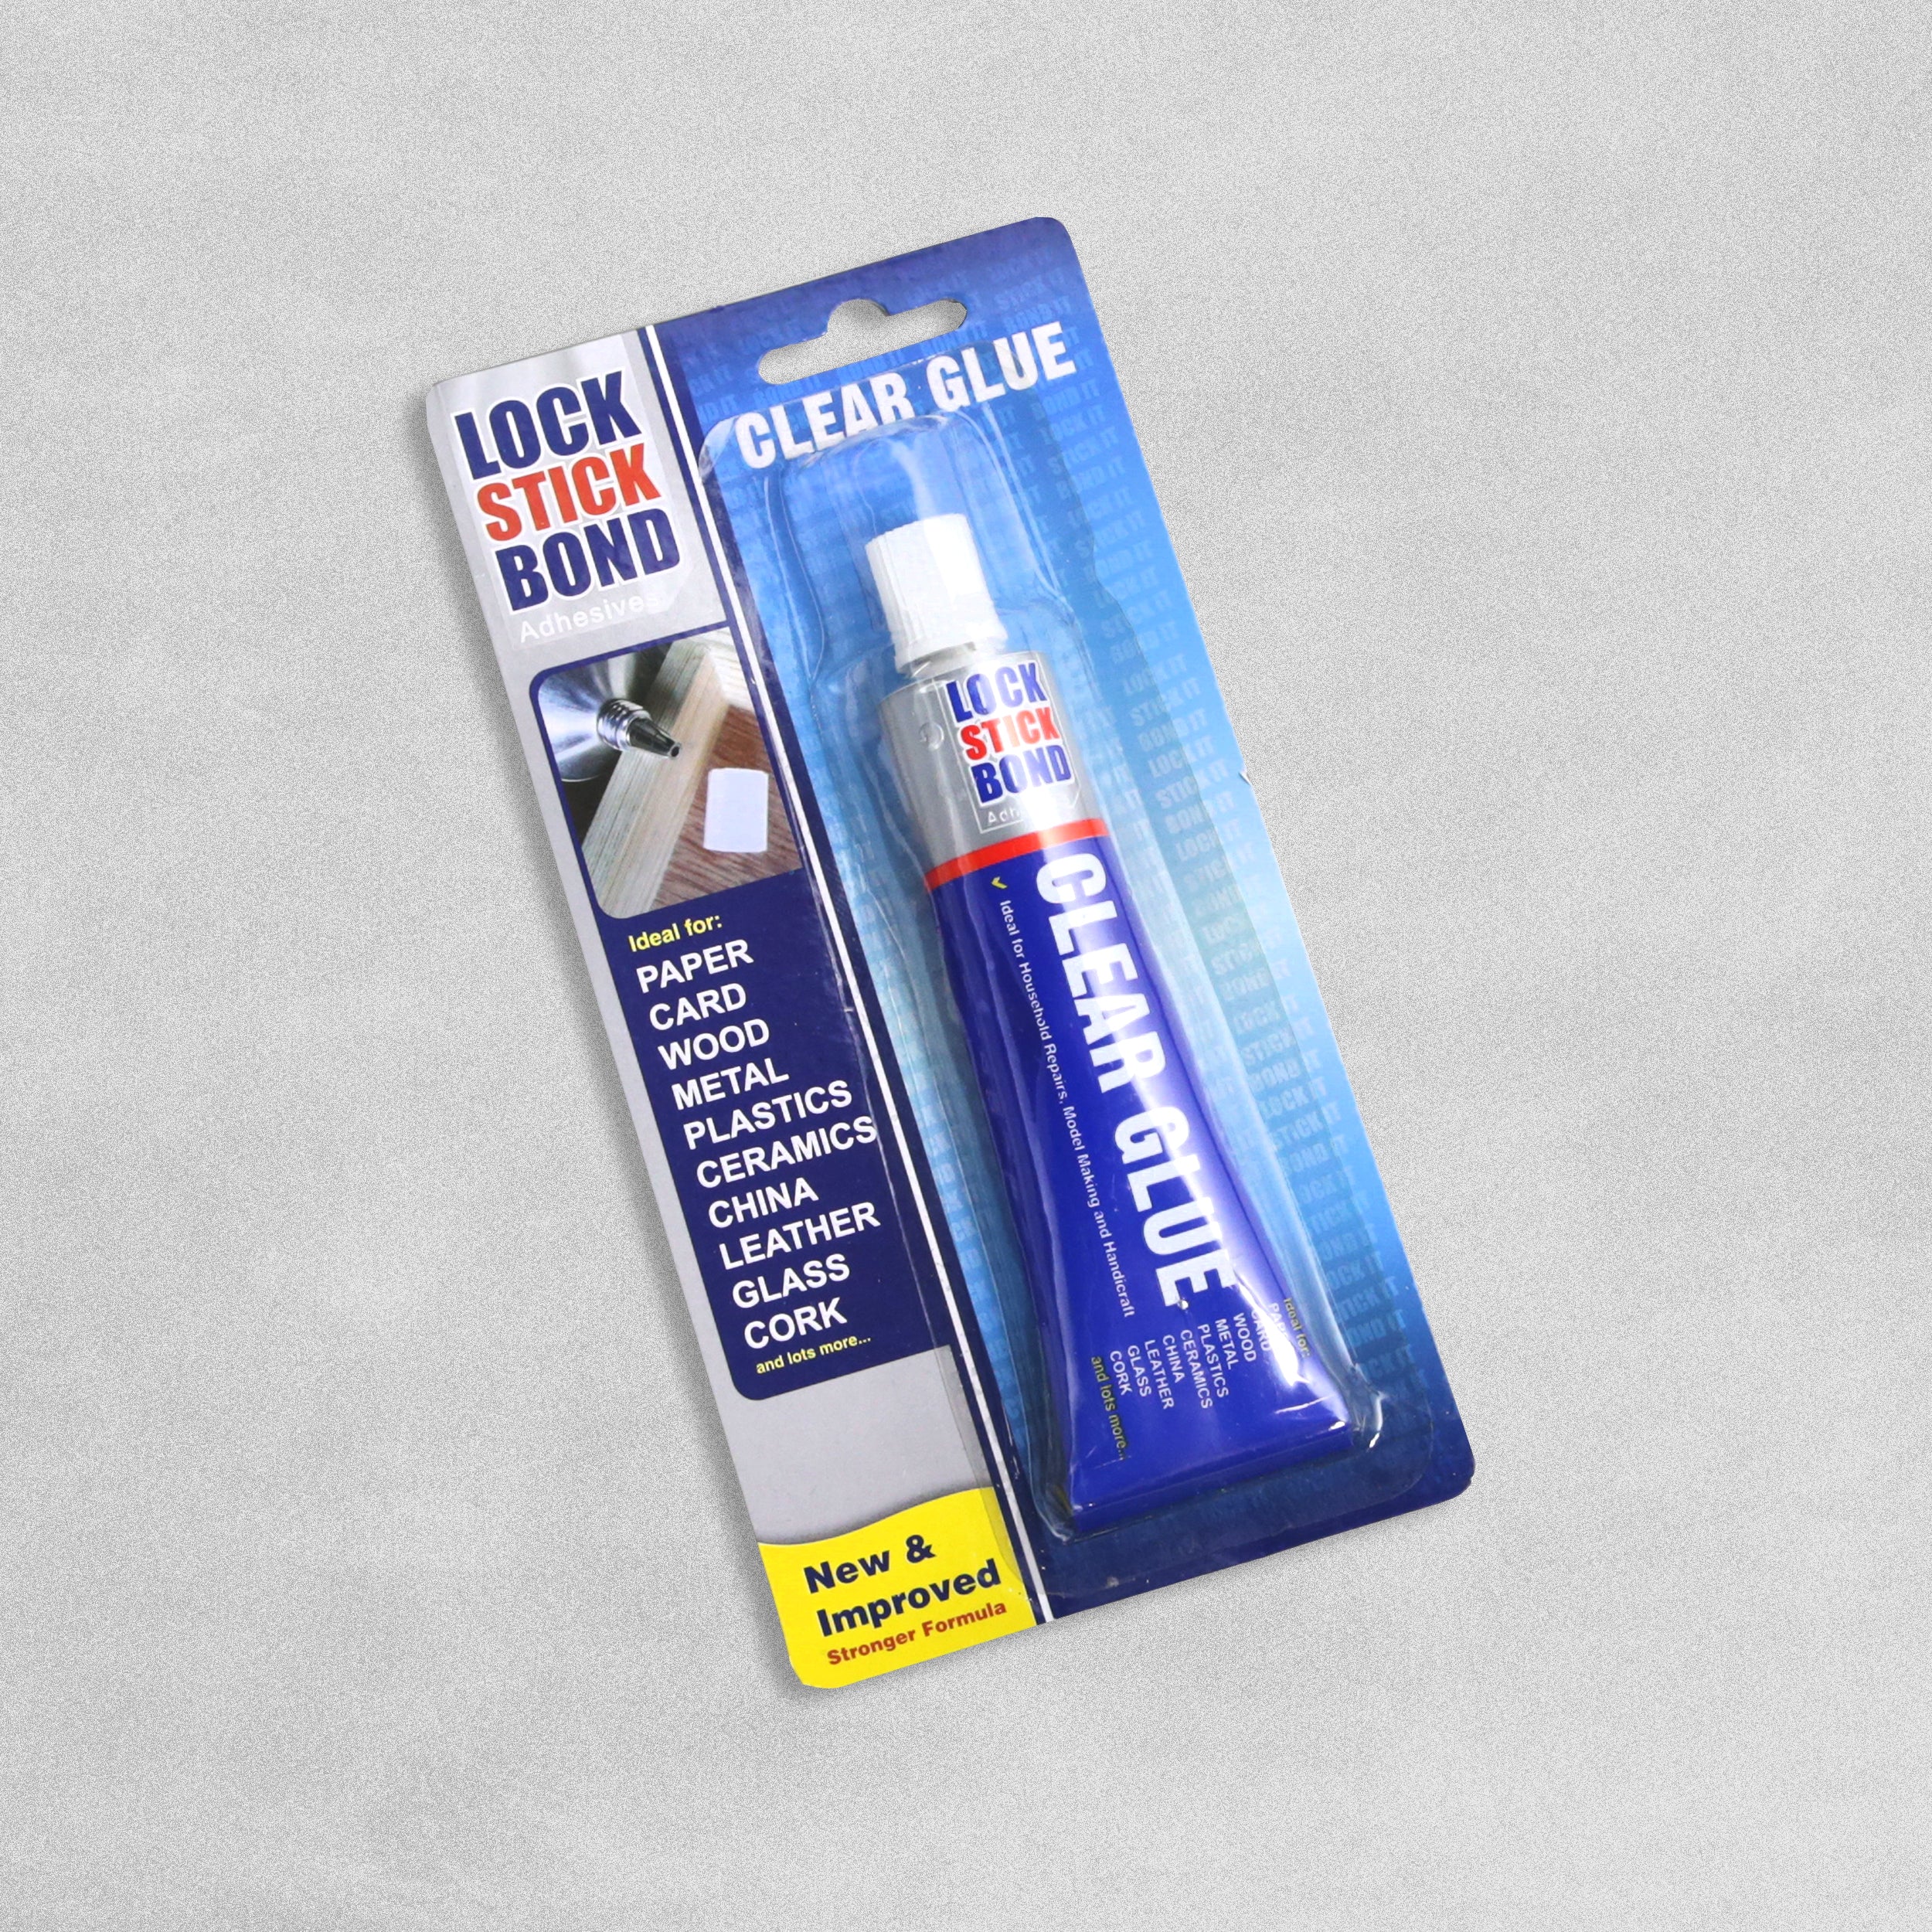 Lock Stick Bond Clear Glue - 30G Tube